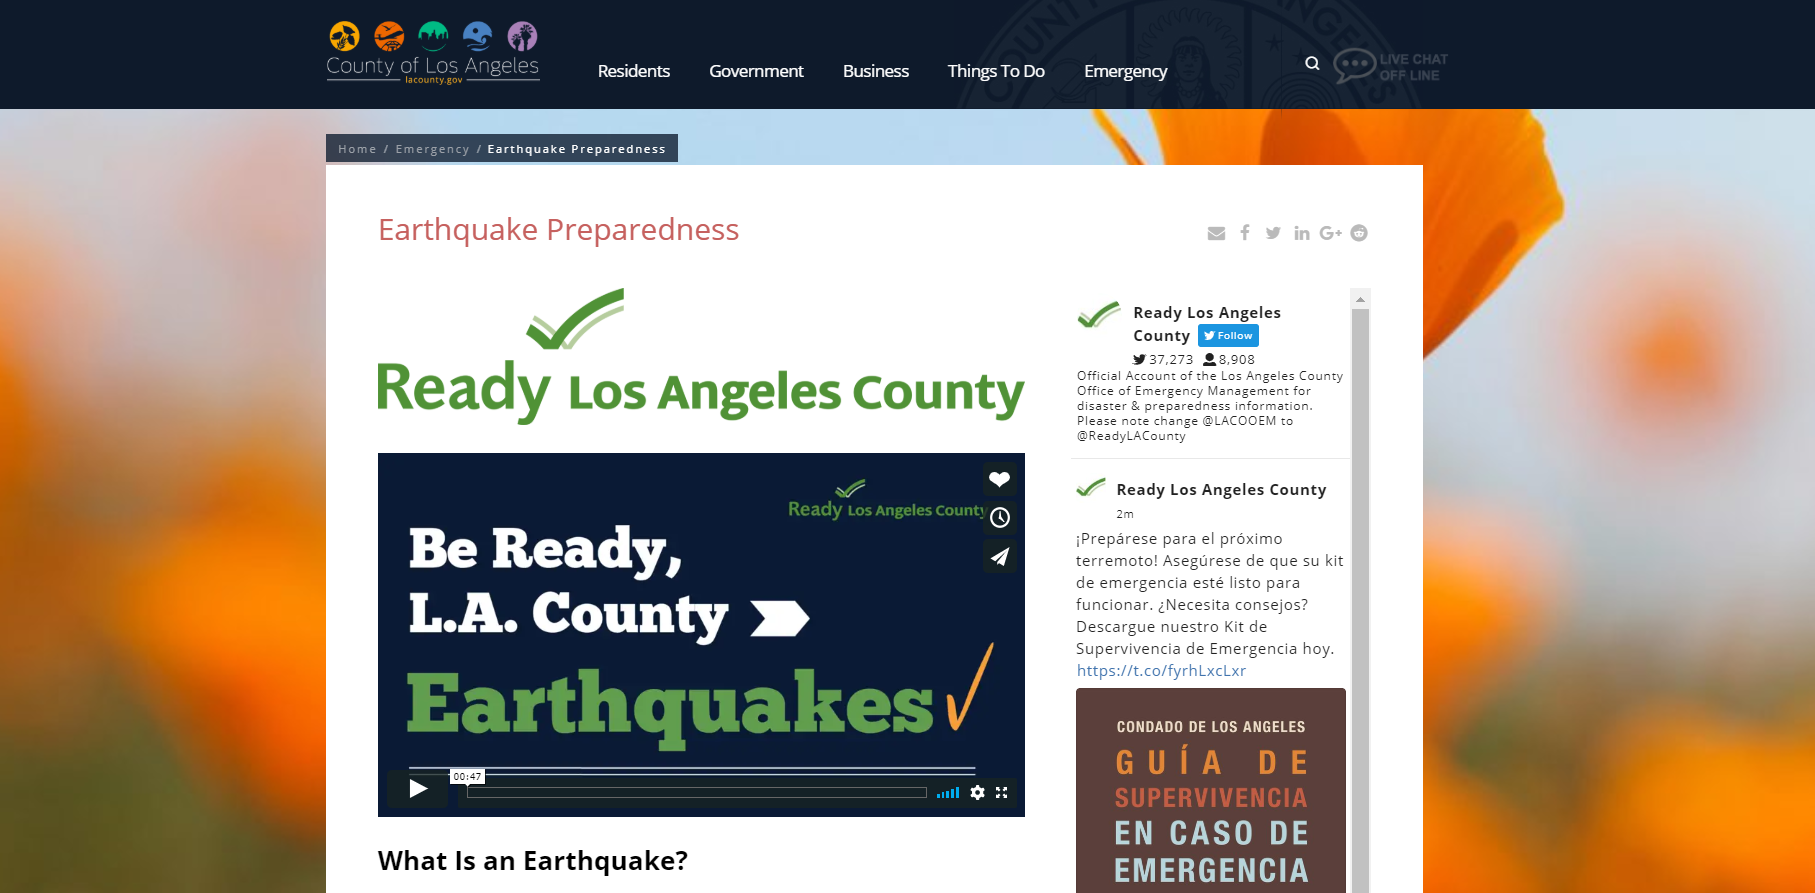 Earthquake Preparedness by L.A. County